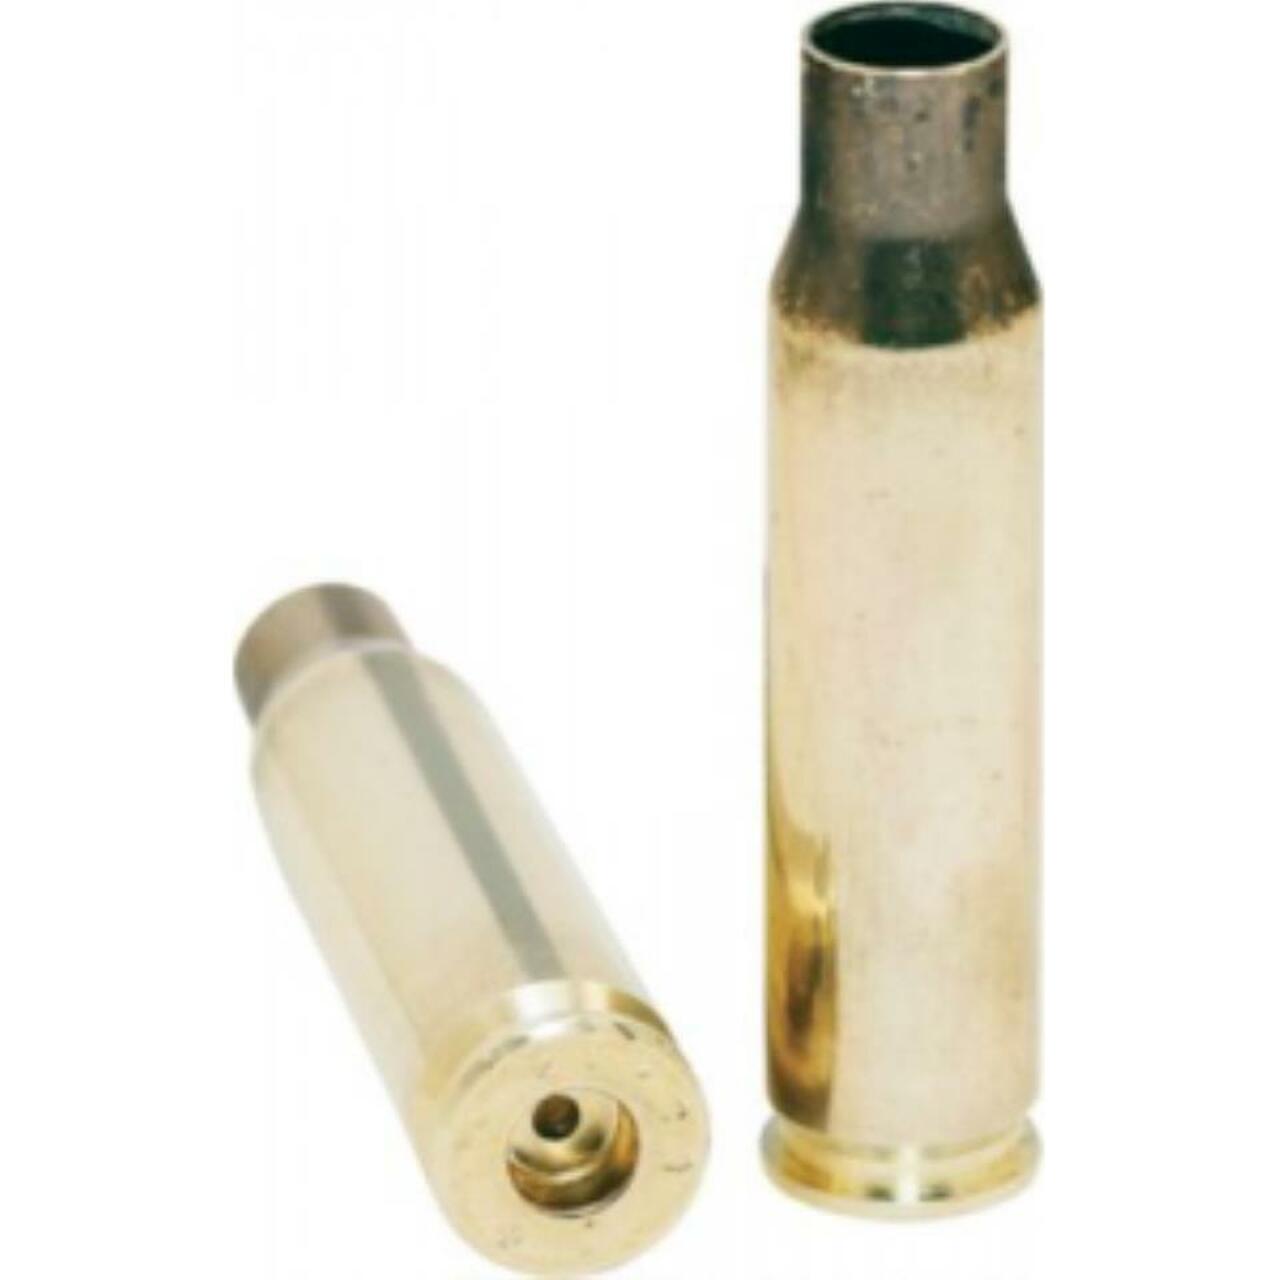 Image of Federal Ammunition Lake City Unprimed New Brass Cases 5.56mm